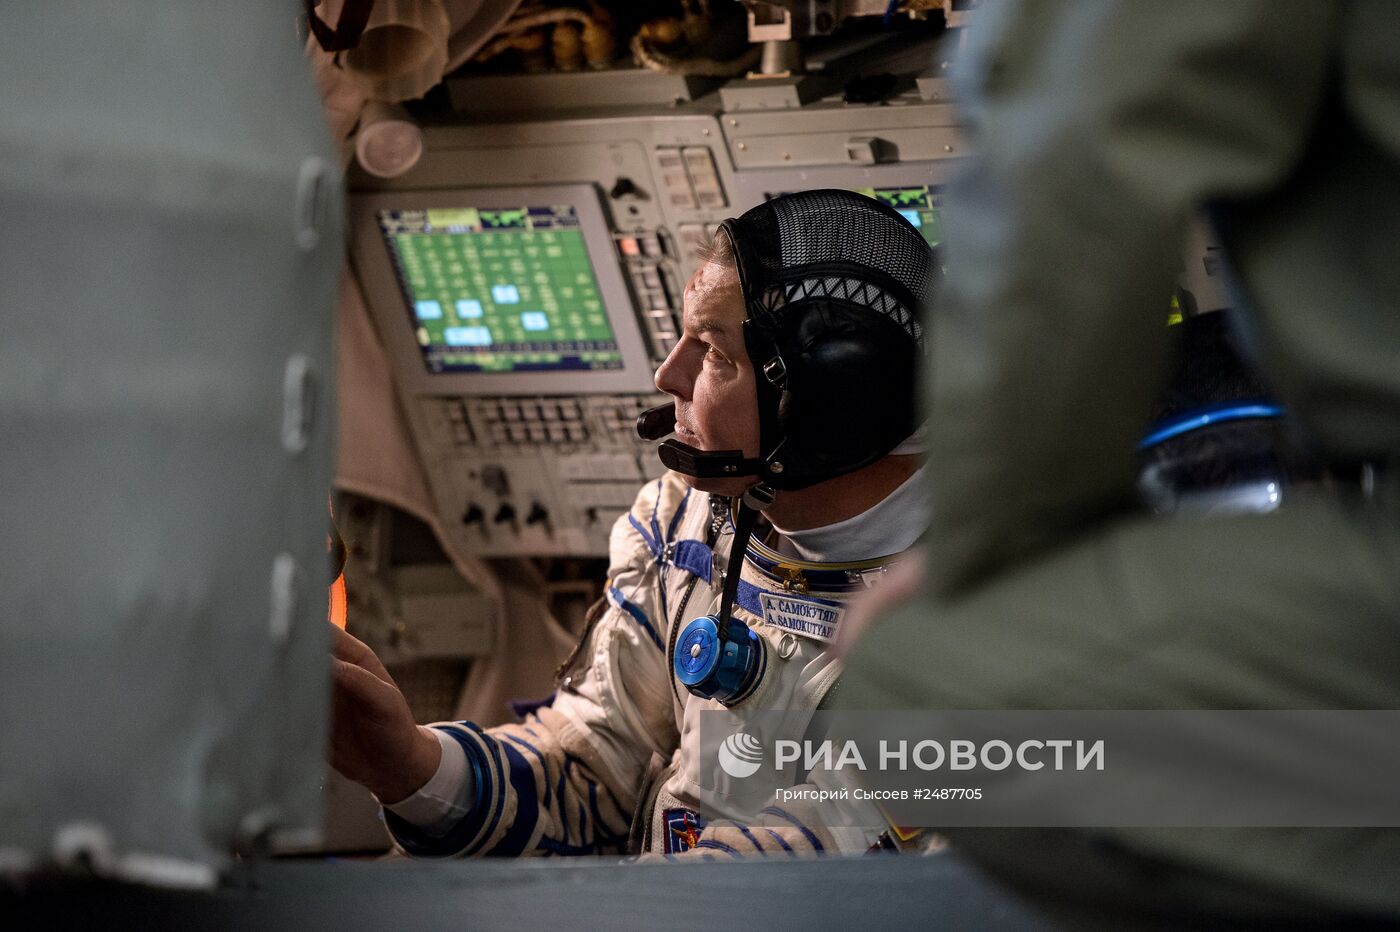 Тренировка основного экипажа МКС-41/42 на тренажере корабля "Союз ТМА-М"